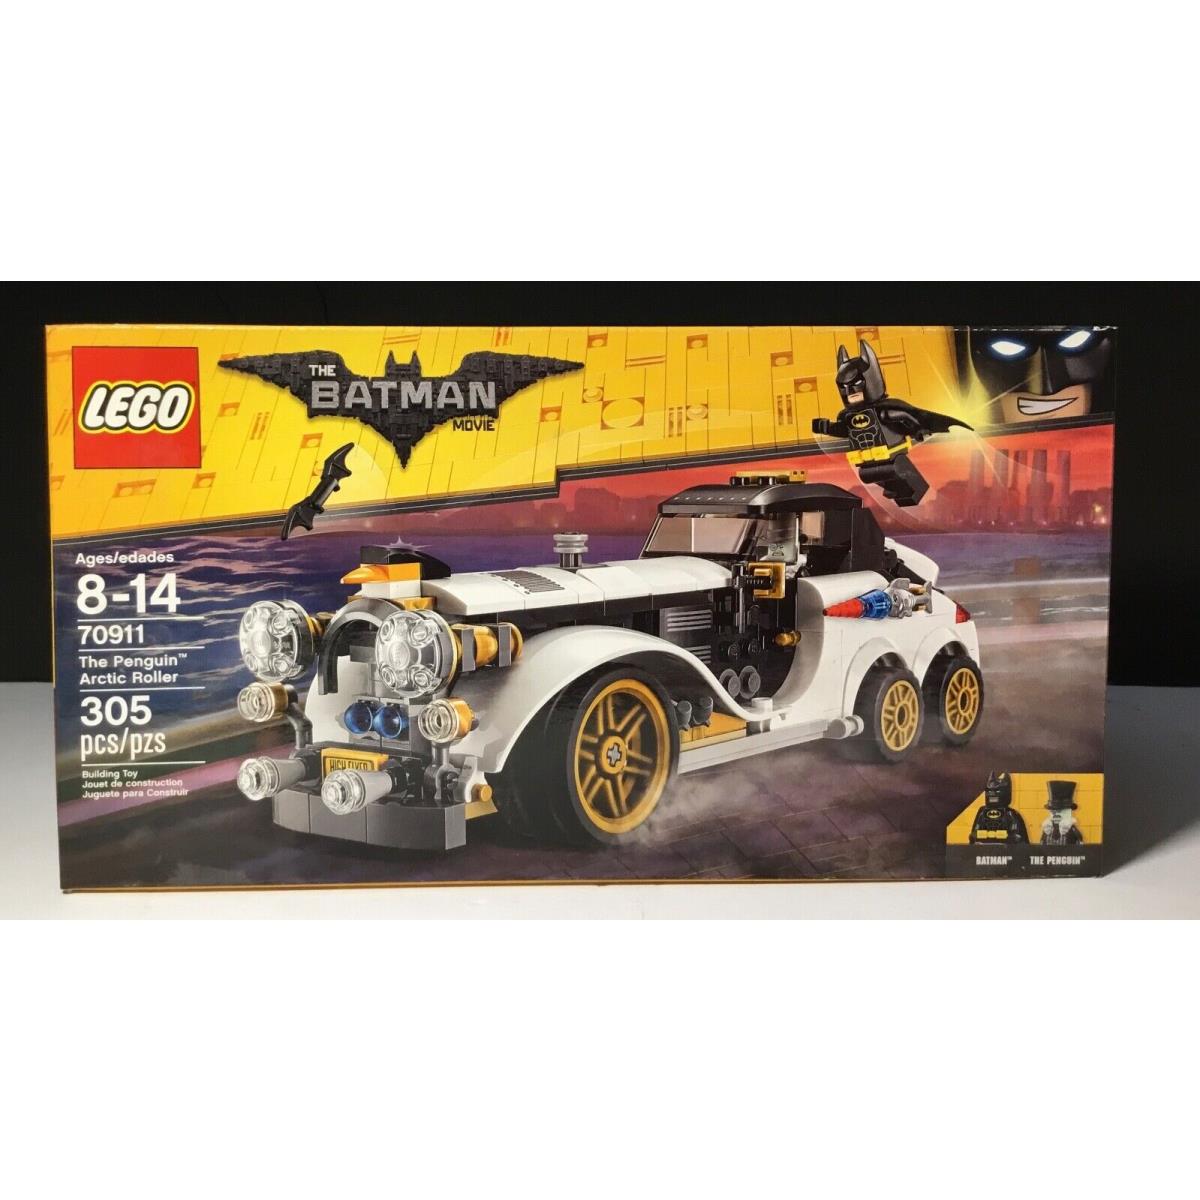 2017 Lego Batman Movie Set 70911-PENGUIN Arctic Roller 305Pcs 2FIGS